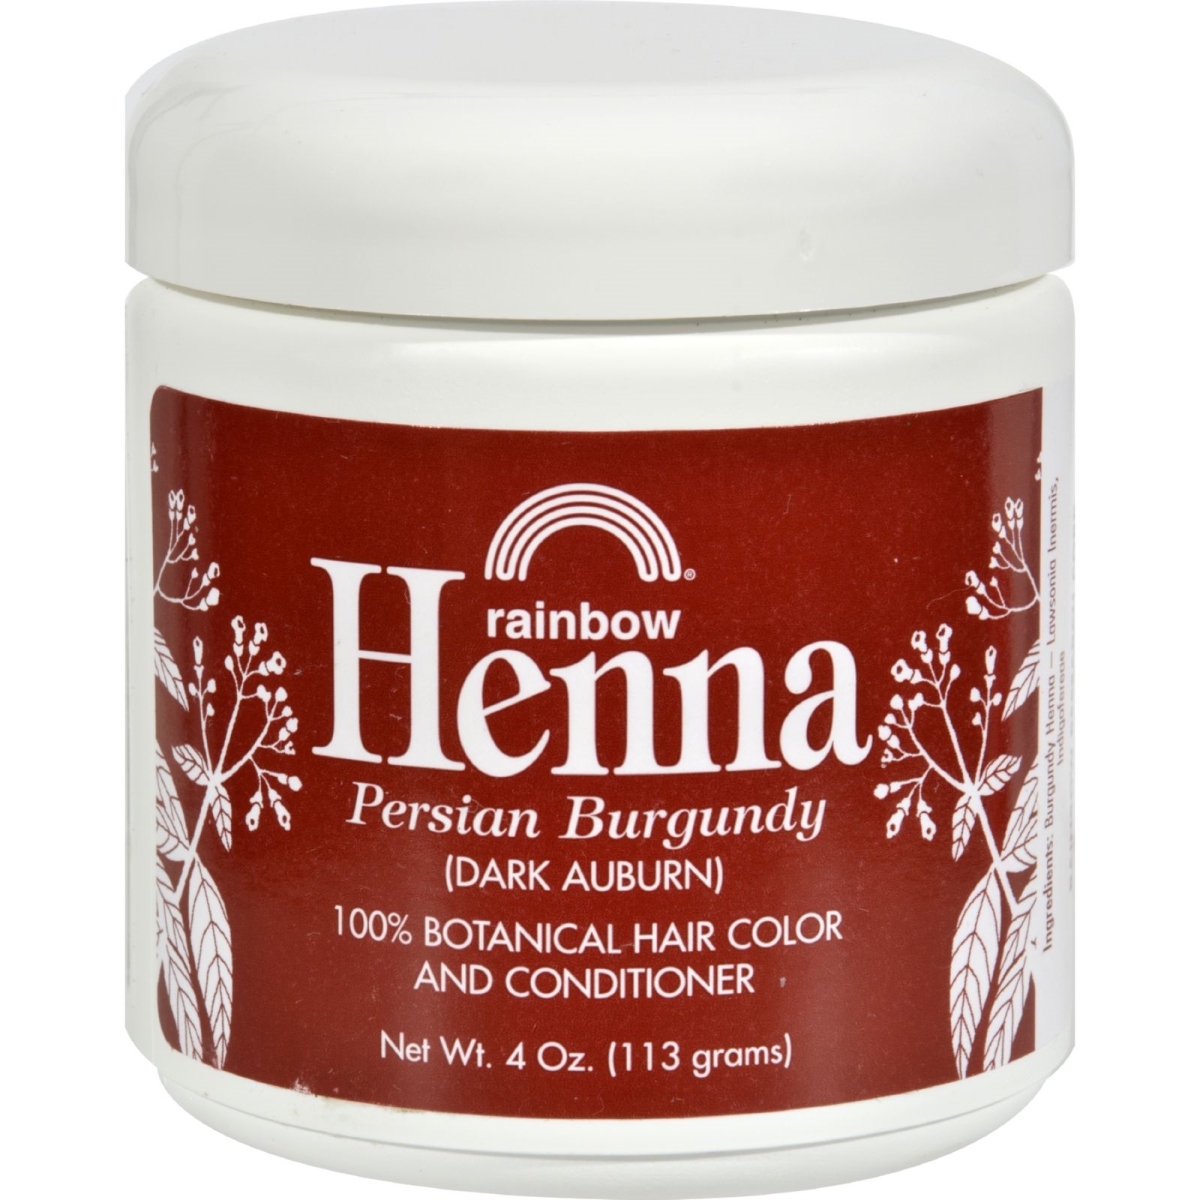 683029 4 Oz Henna Hair Color & Conditioner, Persian Burgundy Dark Auburn